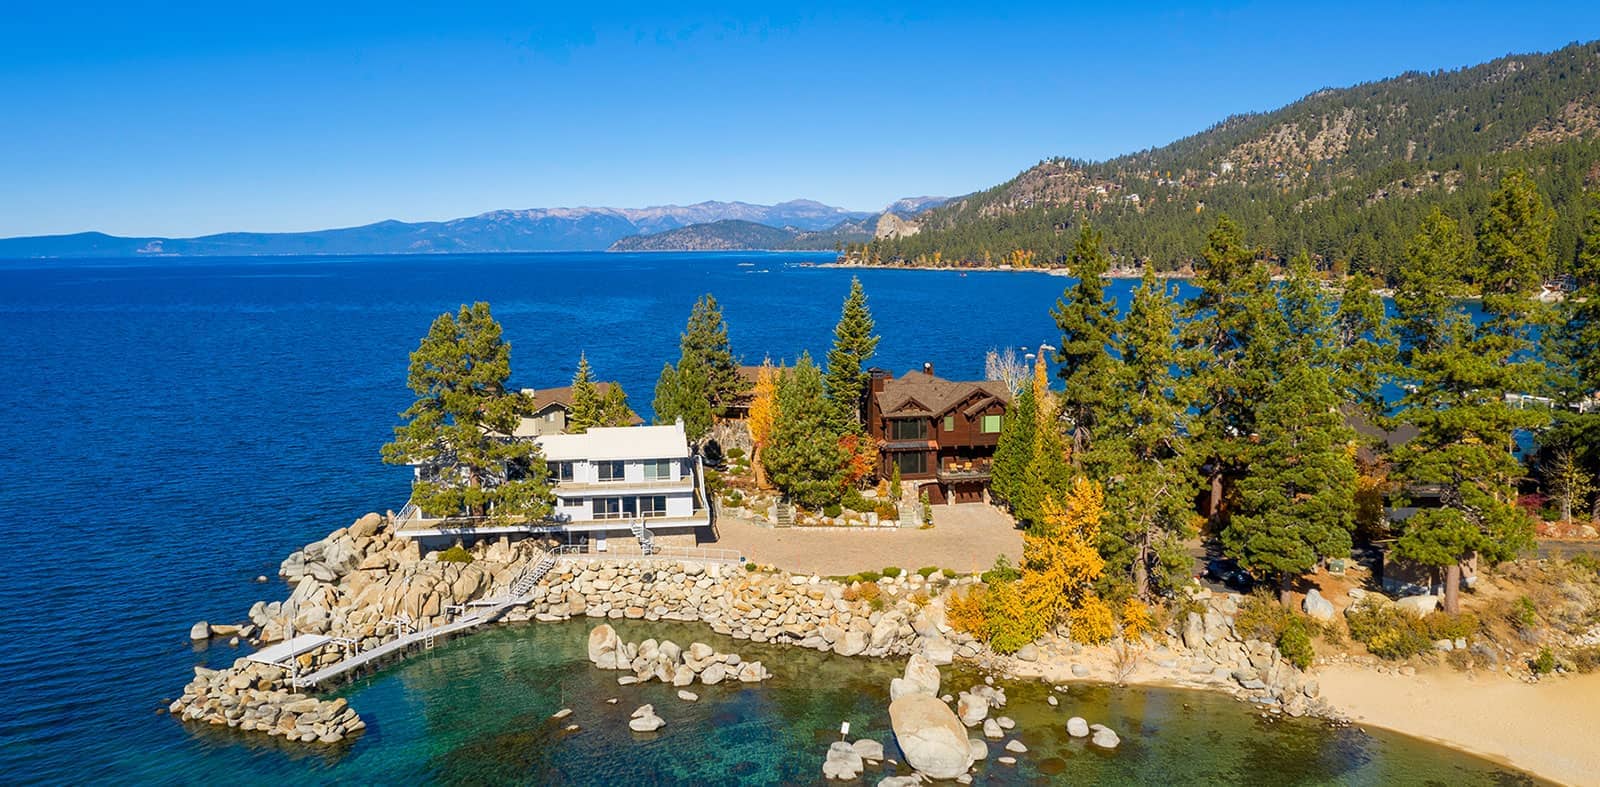 A mordern house near the shore of Lake Tahoe